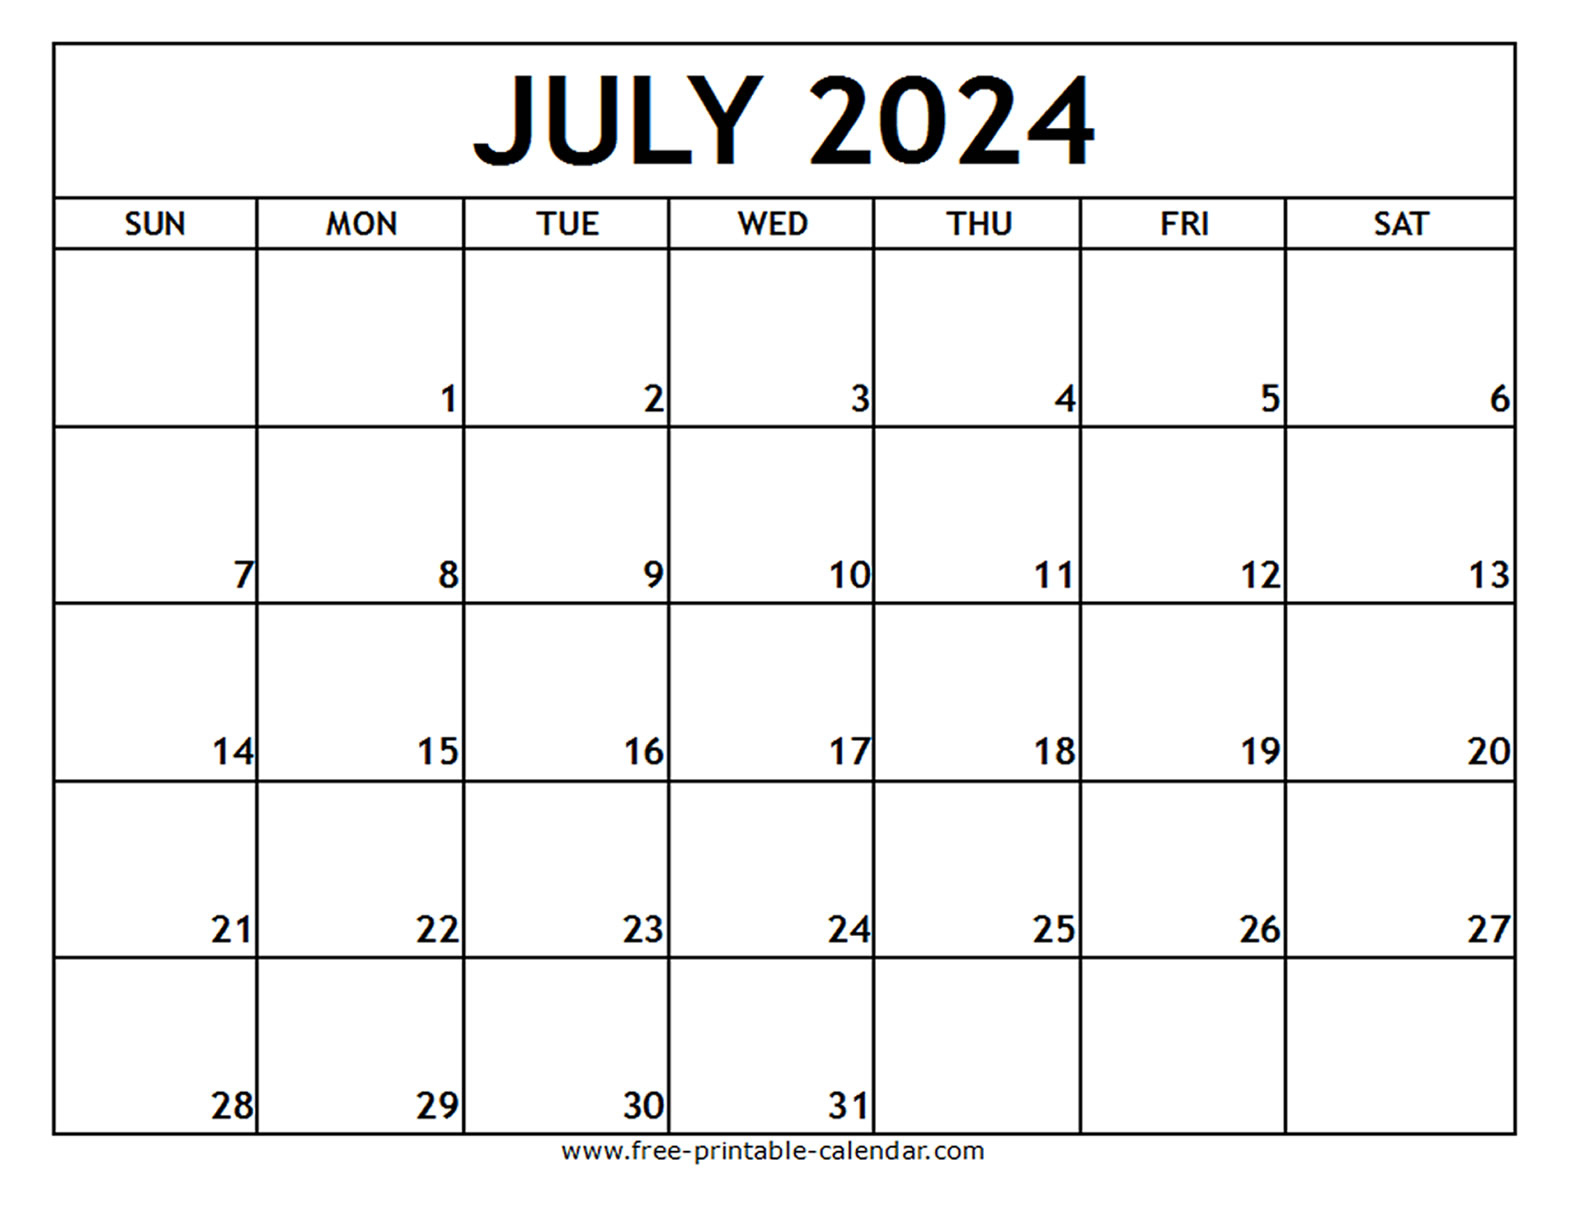 July 2024 Printable Calendar - Free-Printable-Calendar | Free July Printable Calendar 2024